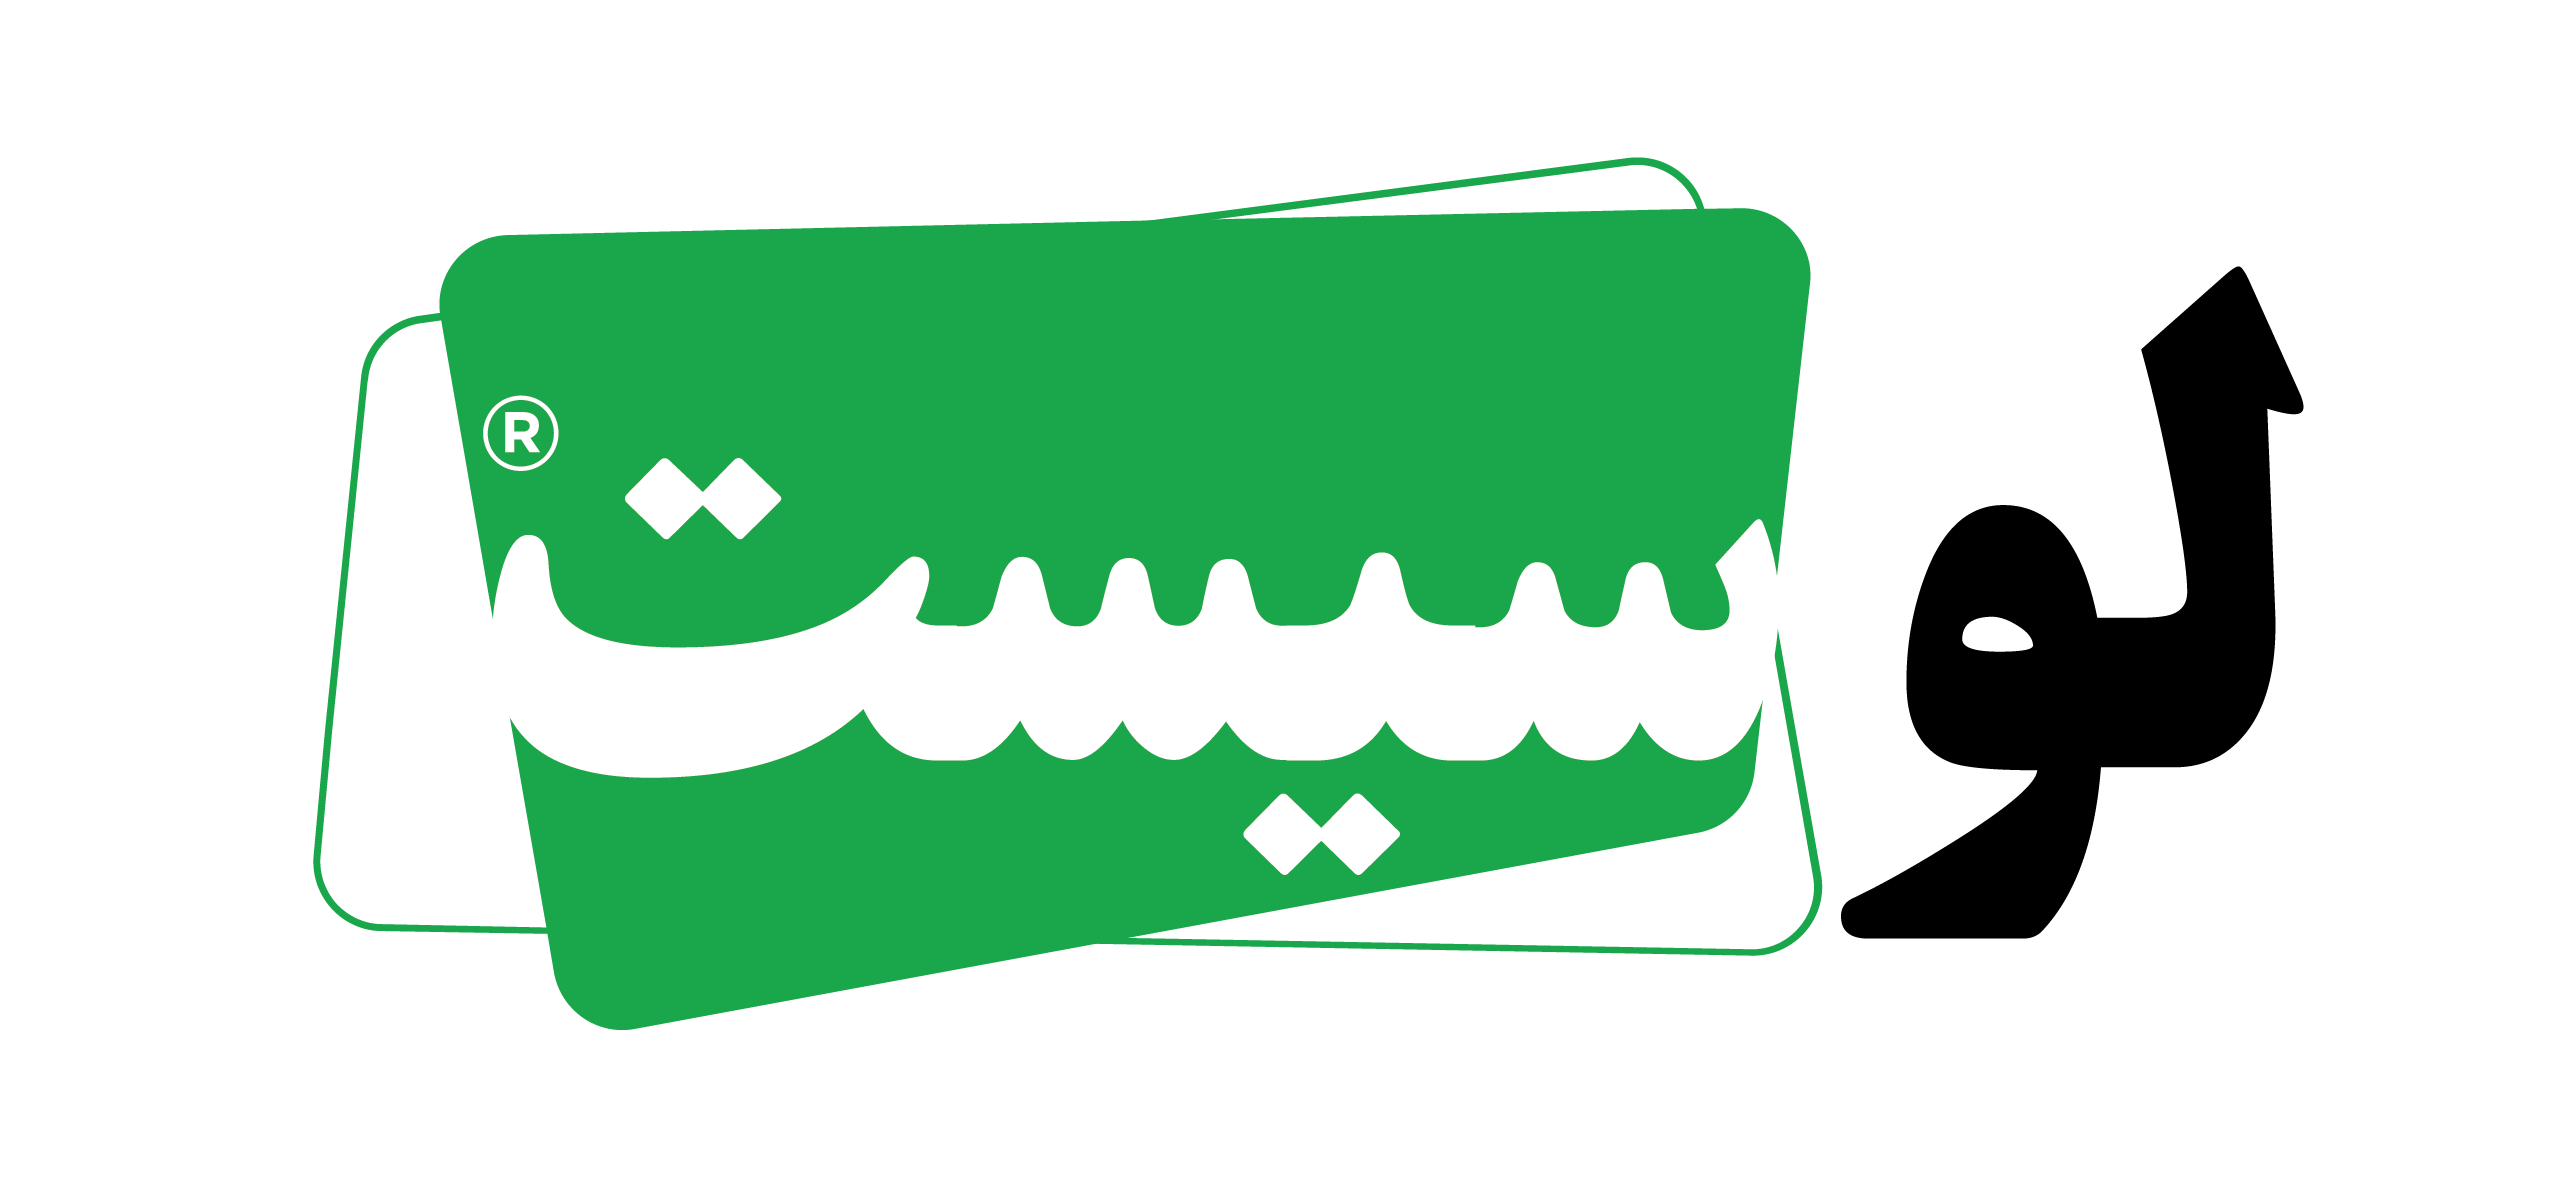 شعار